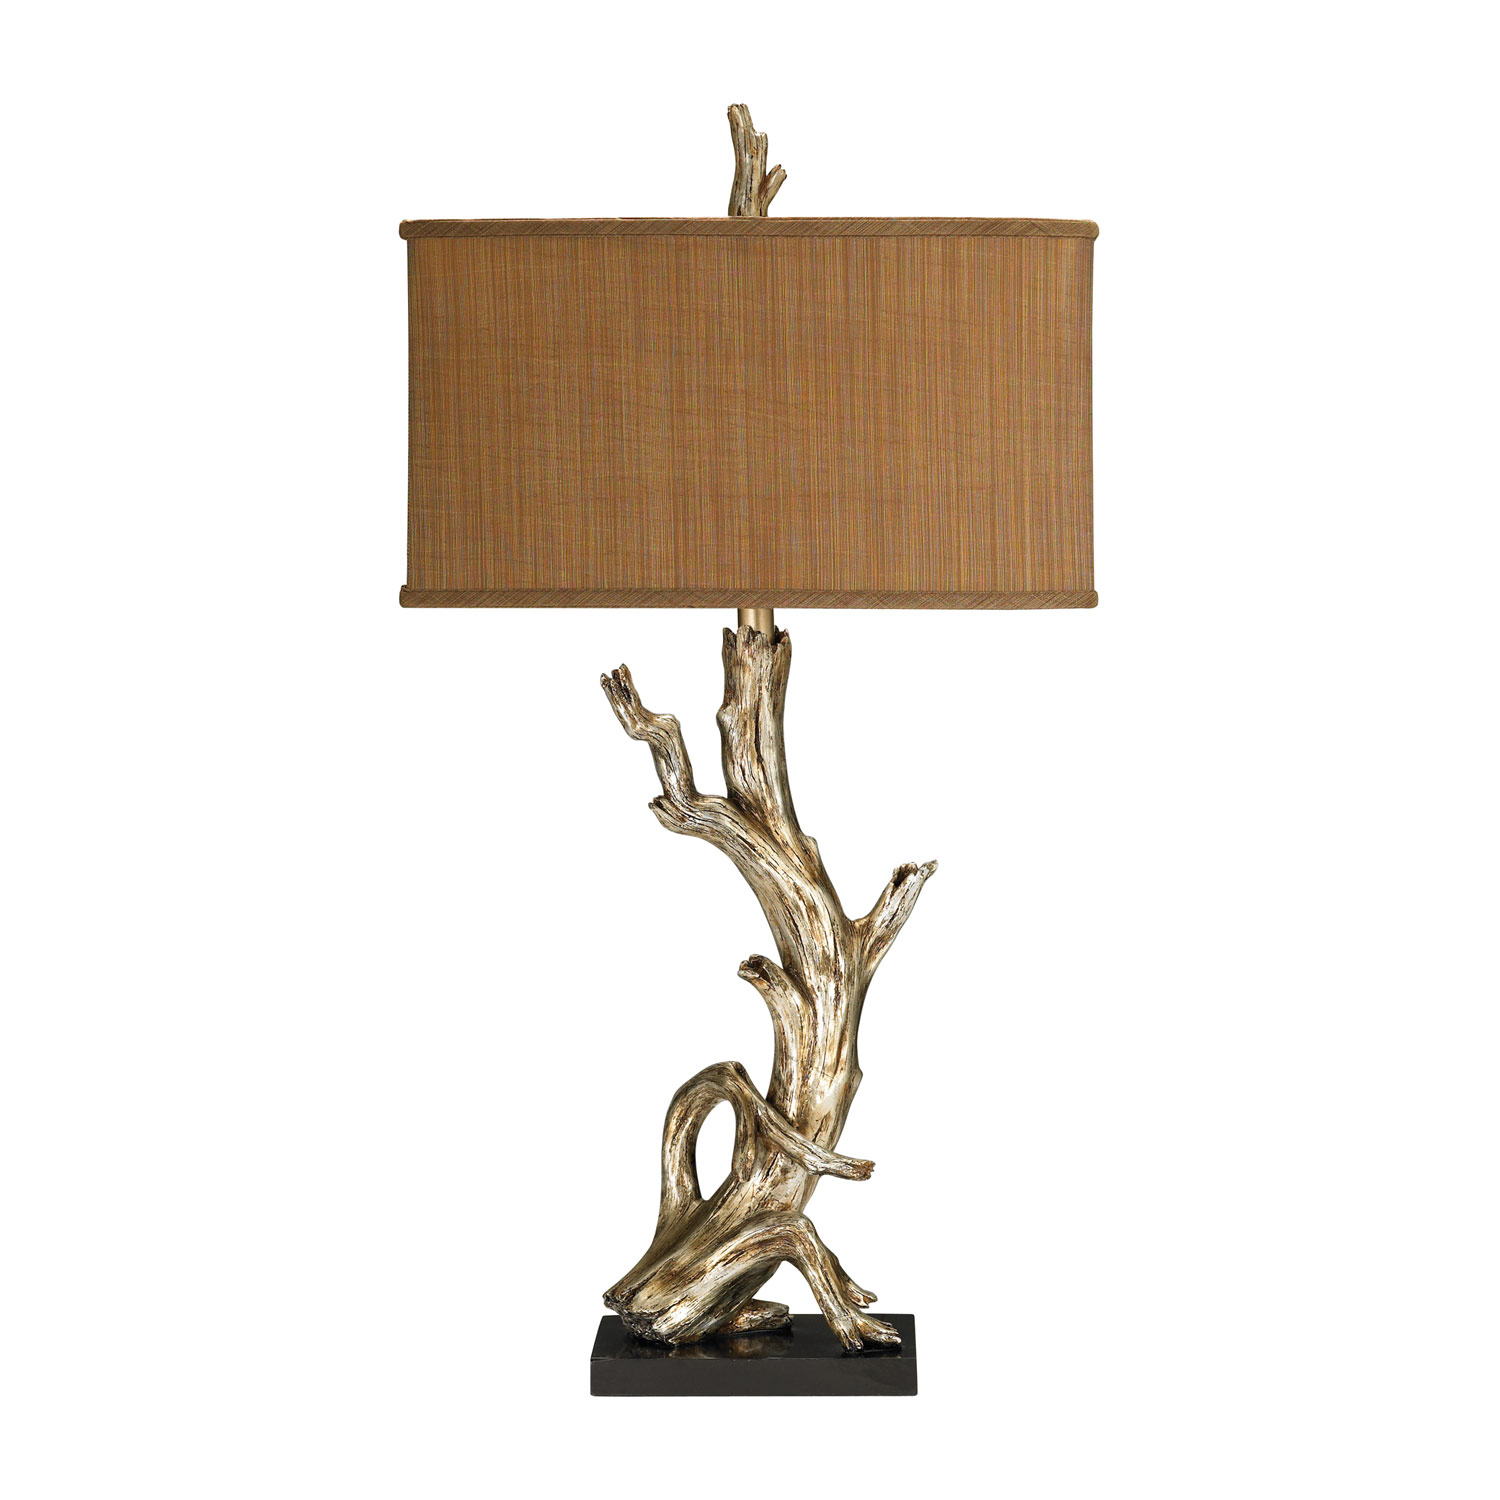 Elk Lighting 91-840 Driftwood Table Lamp - Silver Leaf